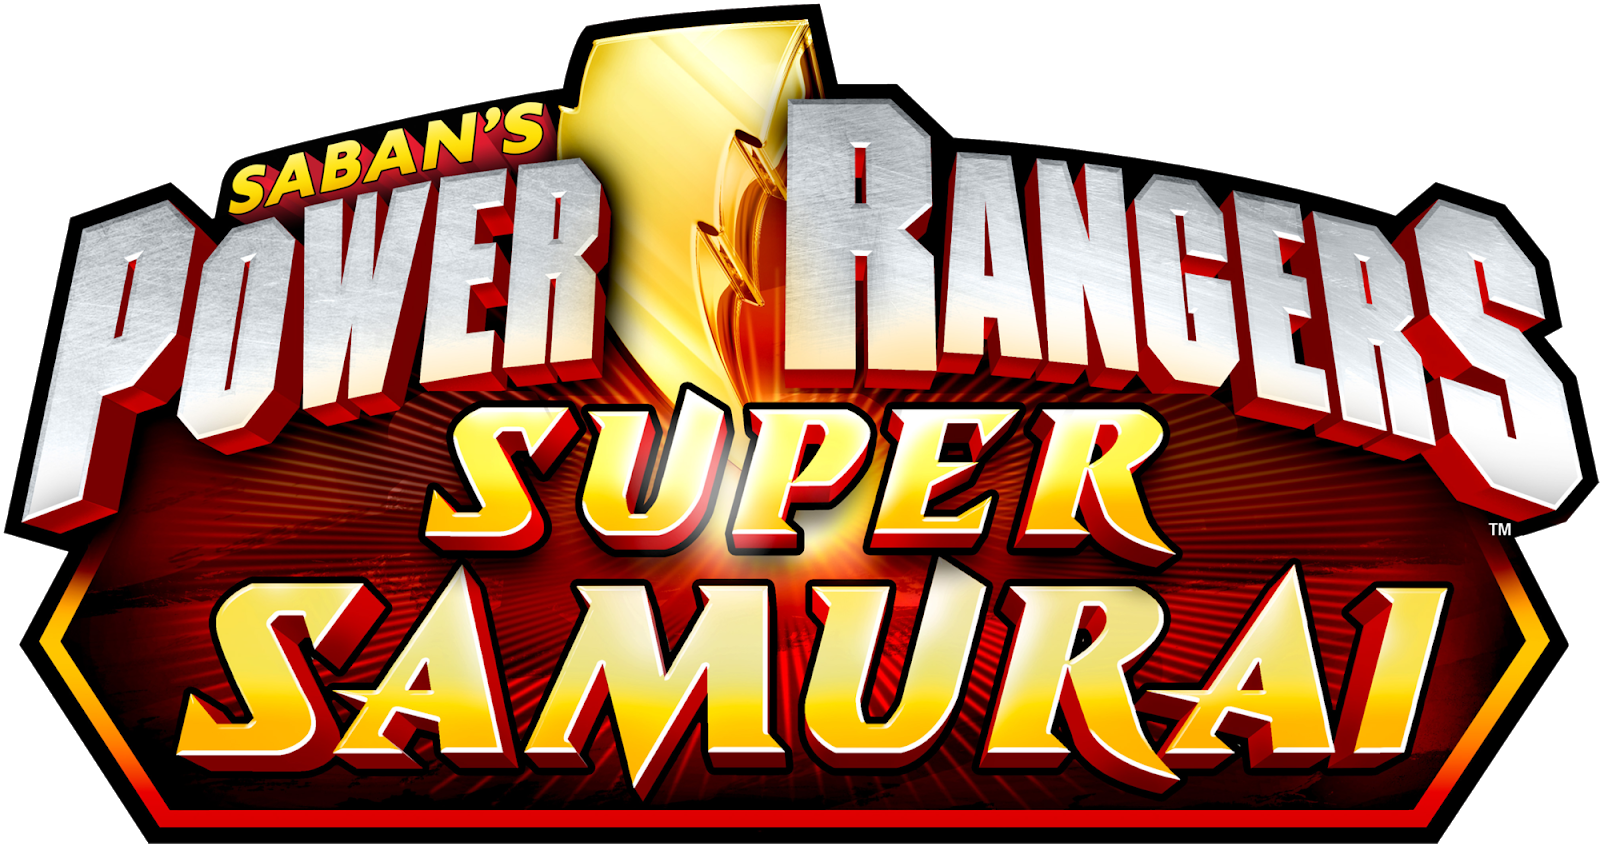 Power Rangers Fúria Cósmica – Baixar Series MP4